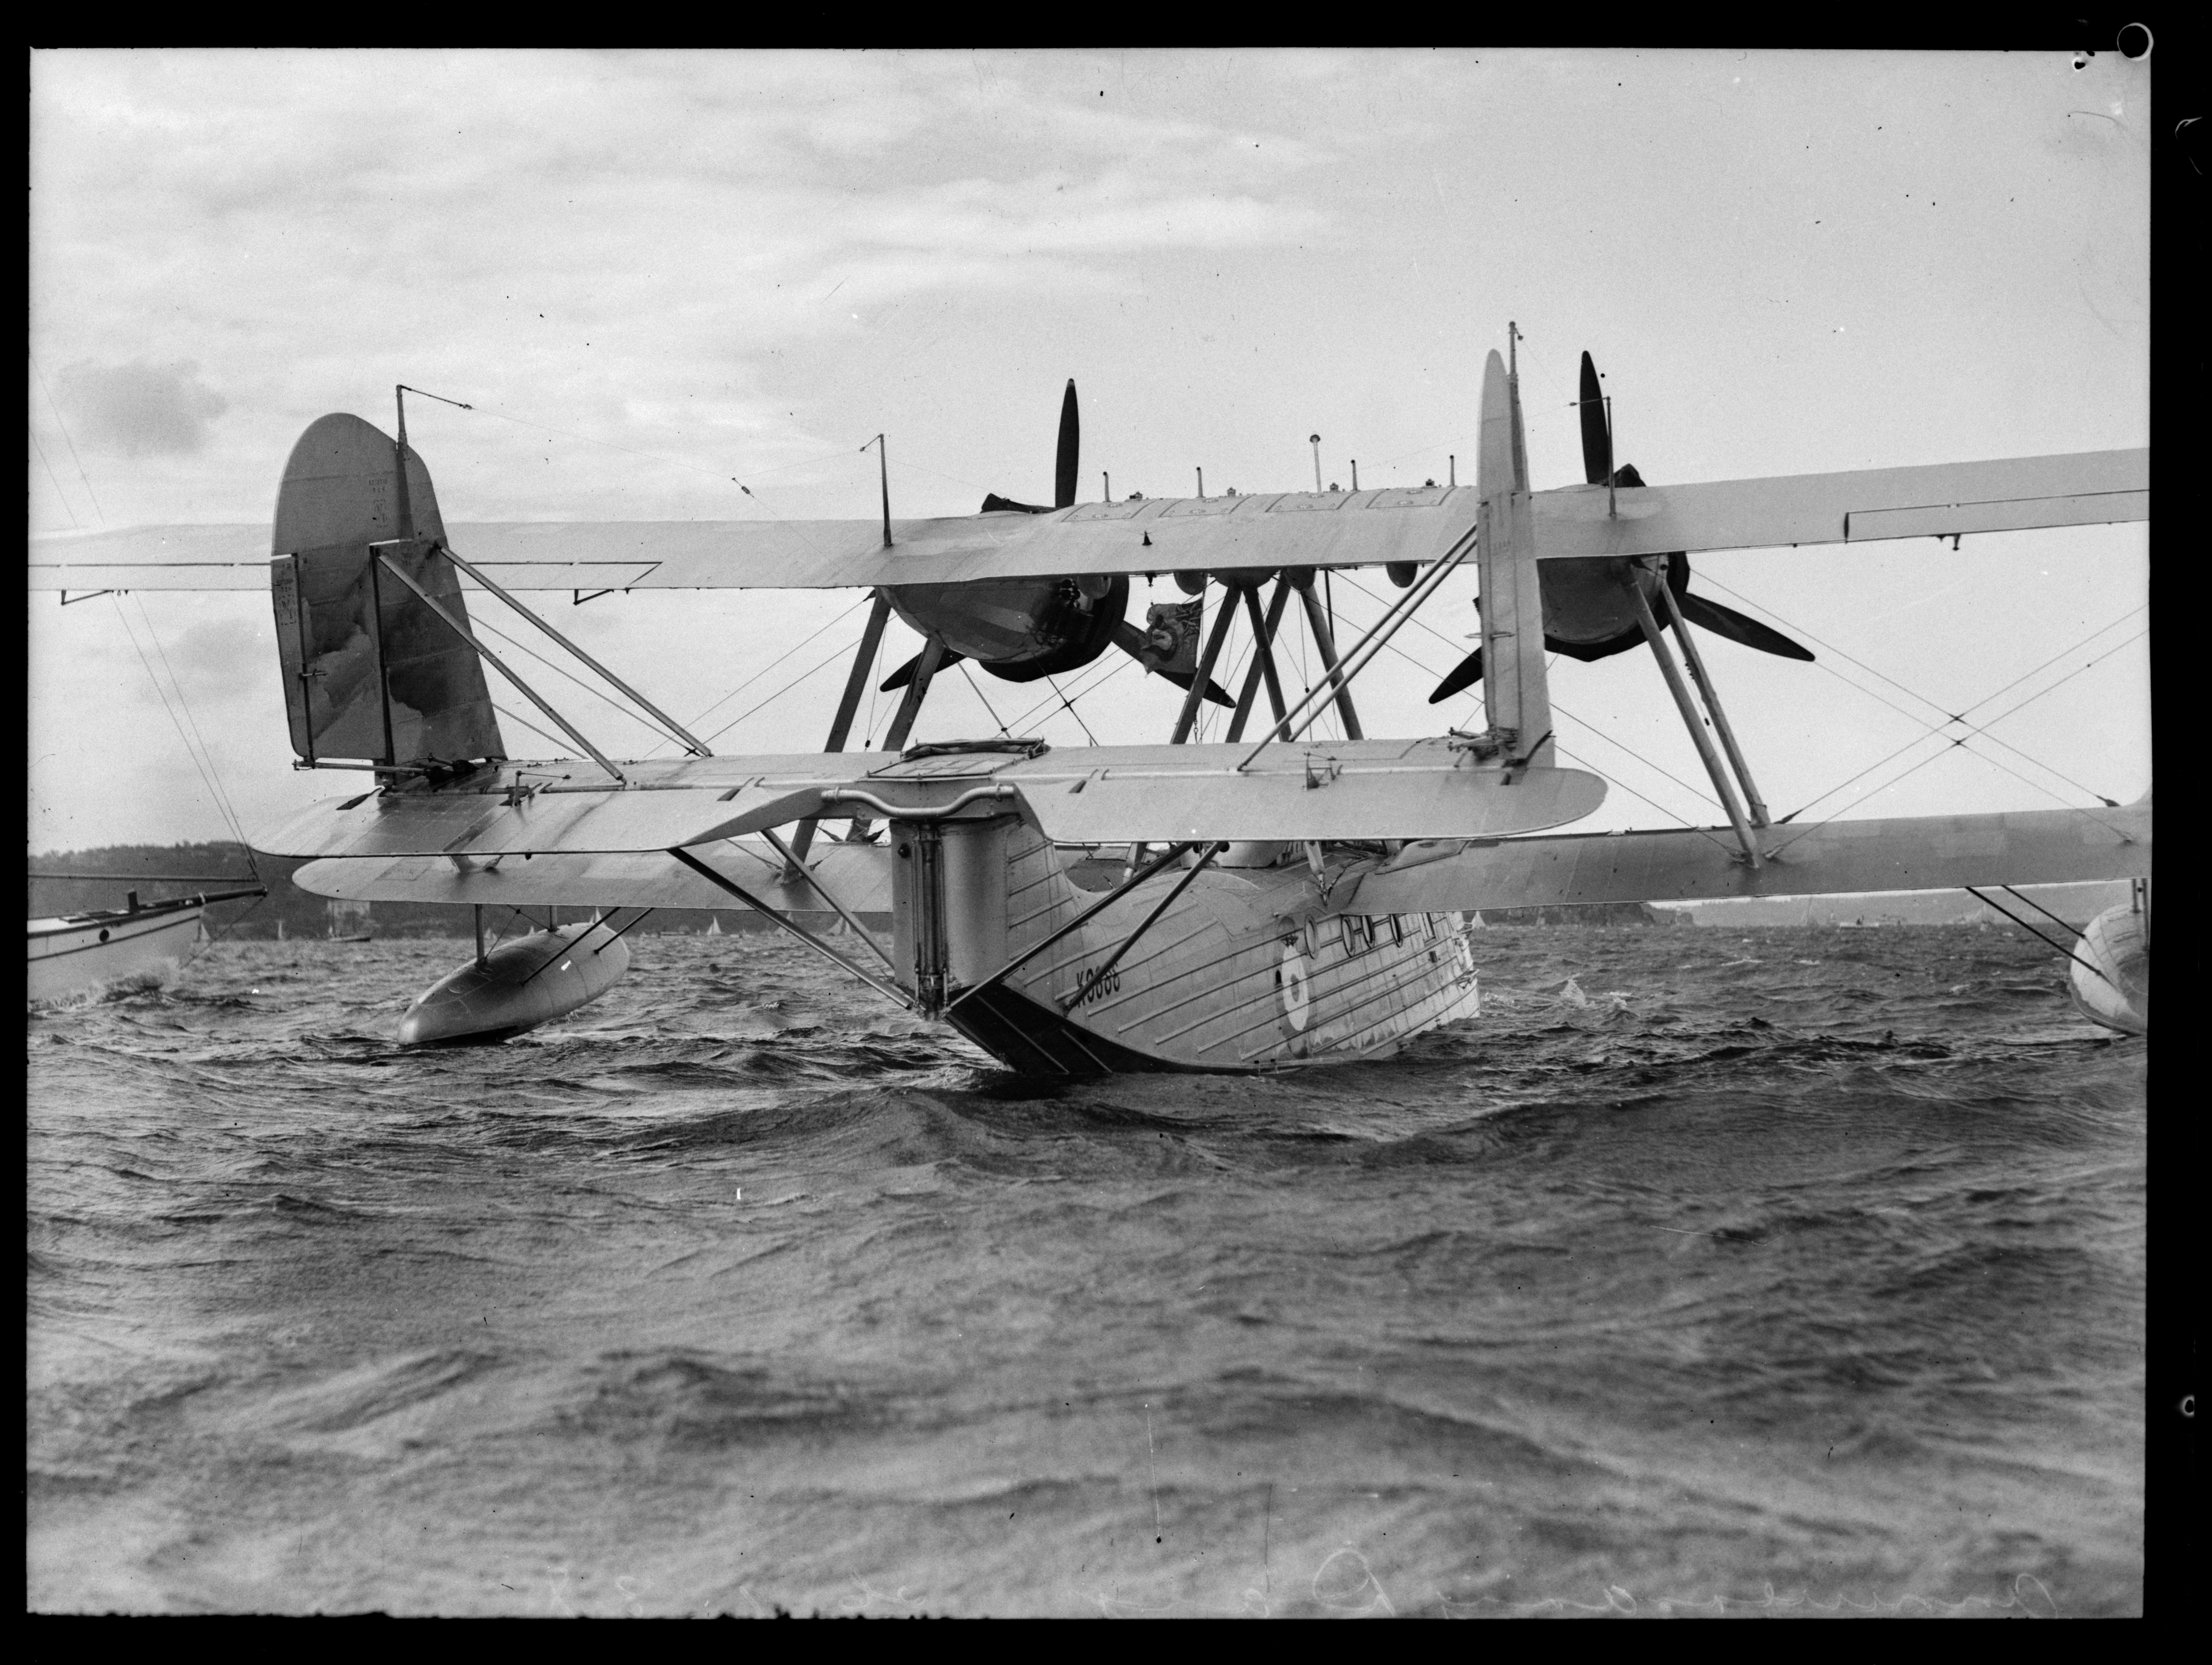 Anniversary Day, seaplane on water, 26 January 1938